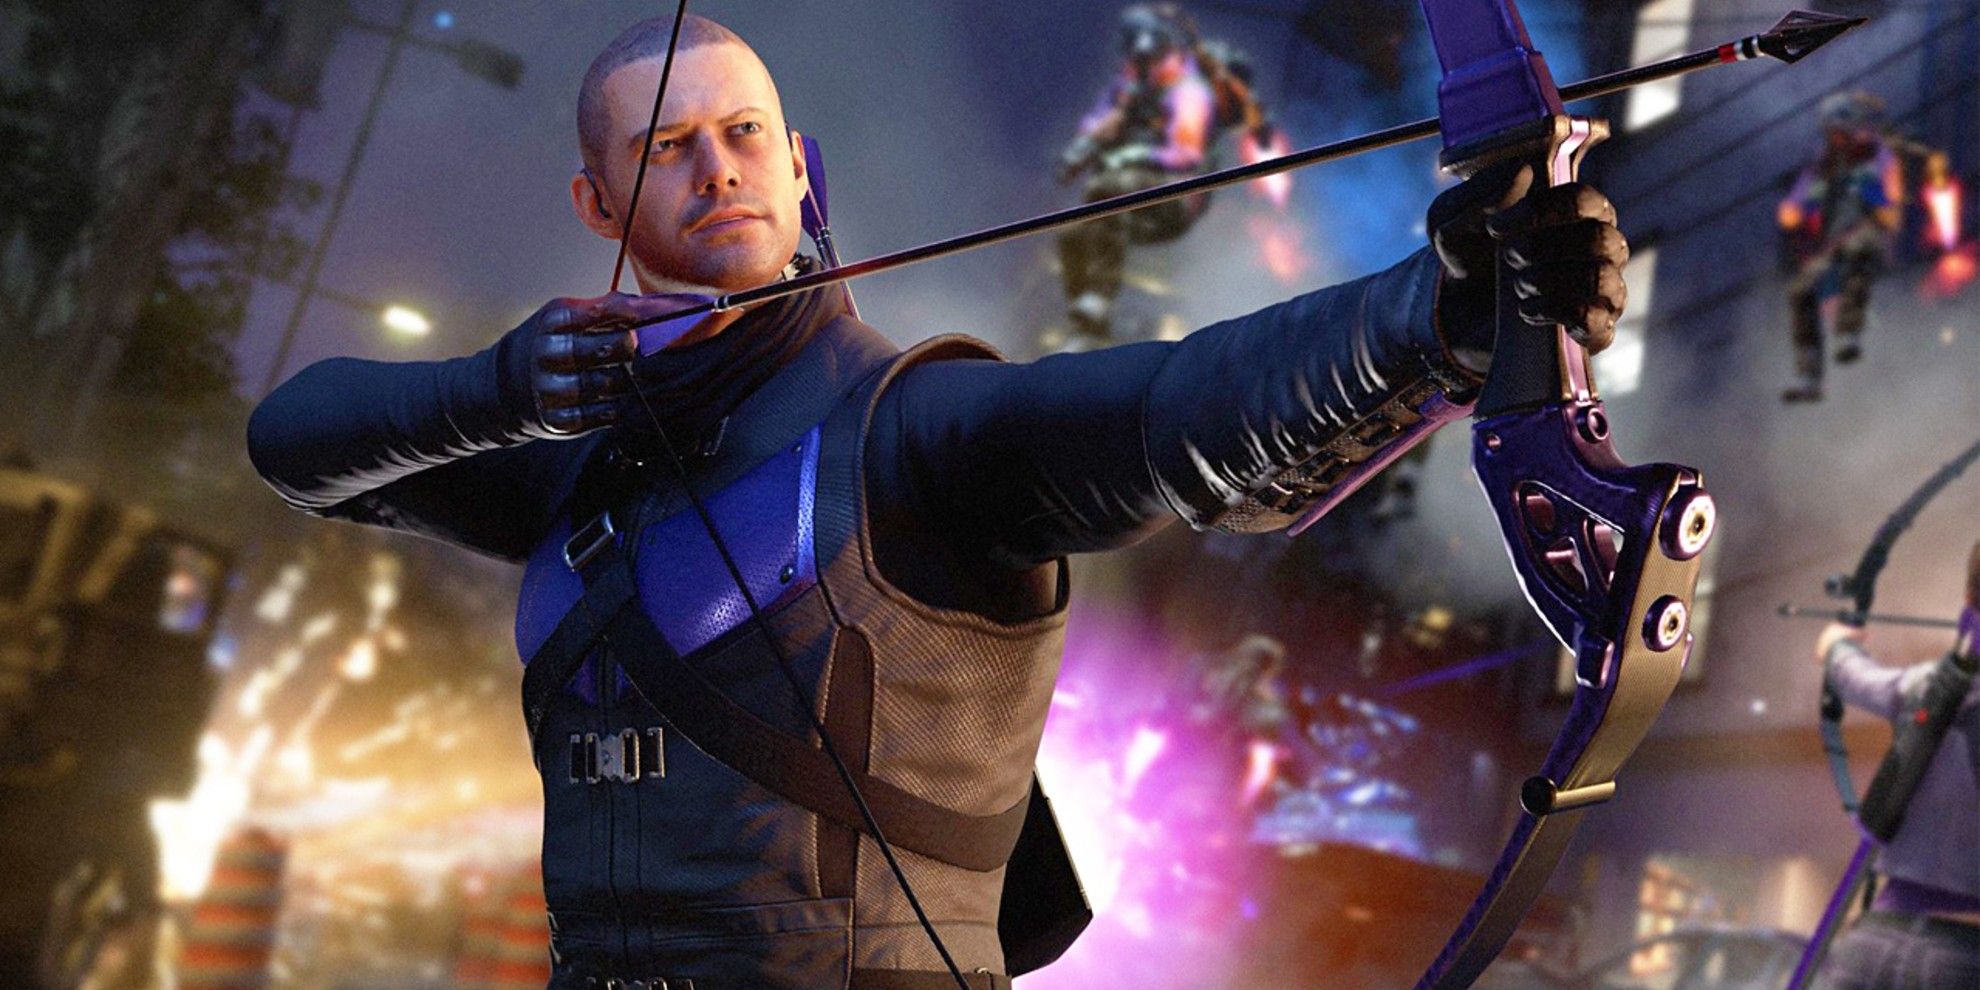 Hawkeye in Square-Enix's Marvel's Avengers